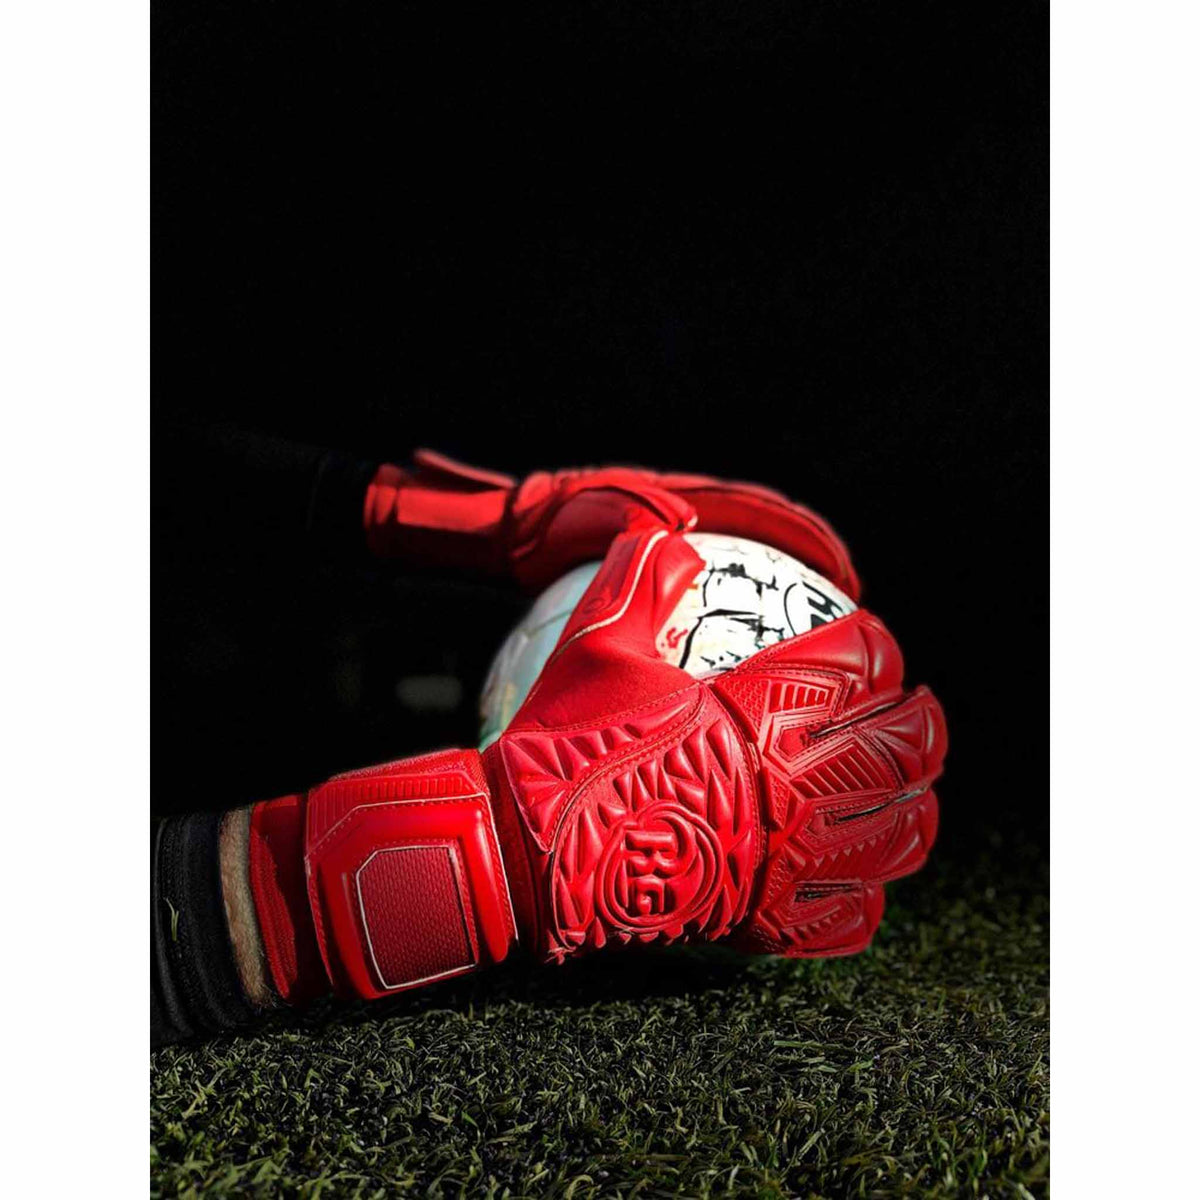 RG Goalkeeper Gloves Snaga Rosso gants de gardien de but de soccer - Rouge avec ballon